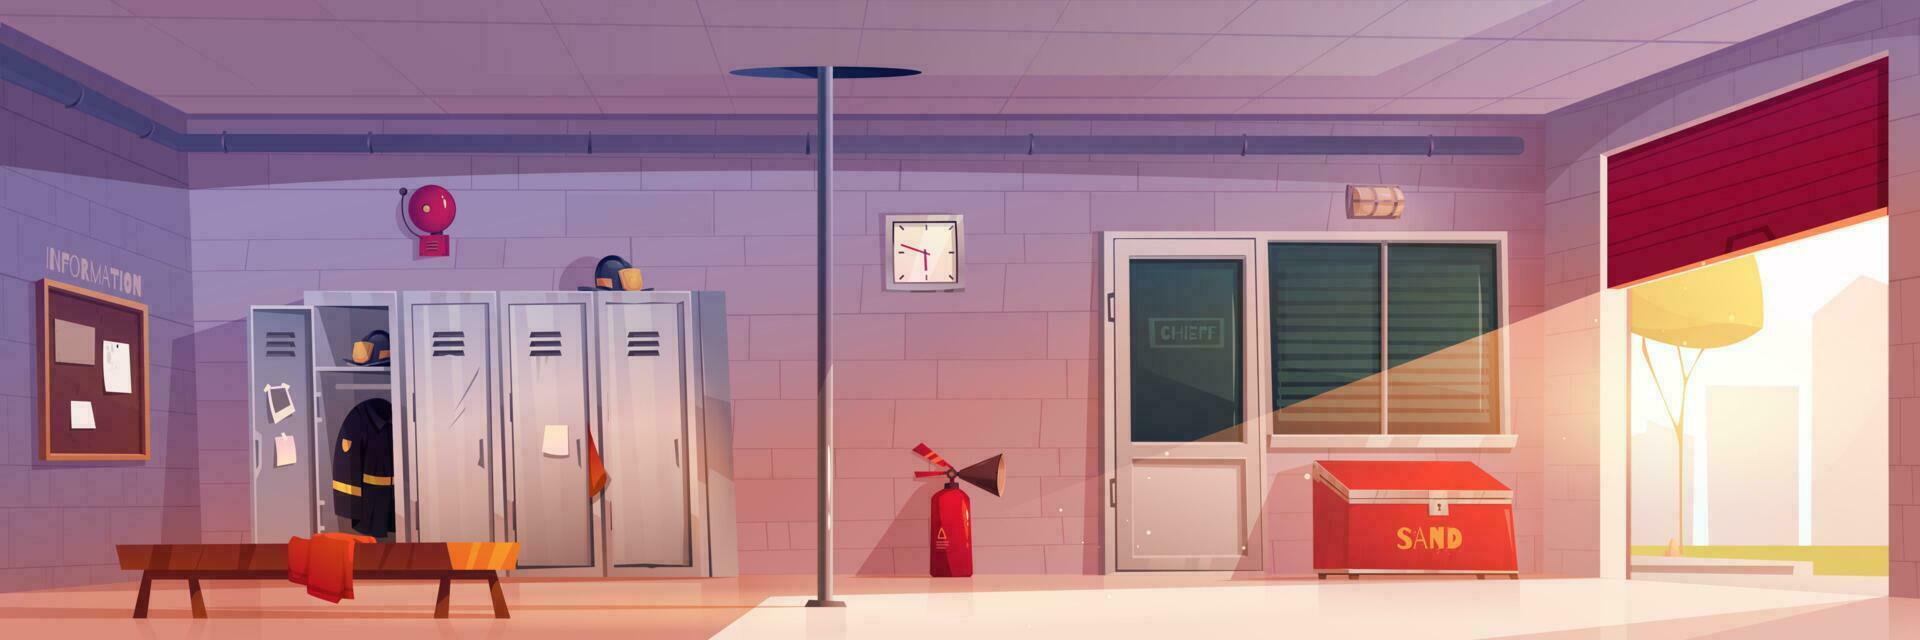 Cartoon fire station interior design vector